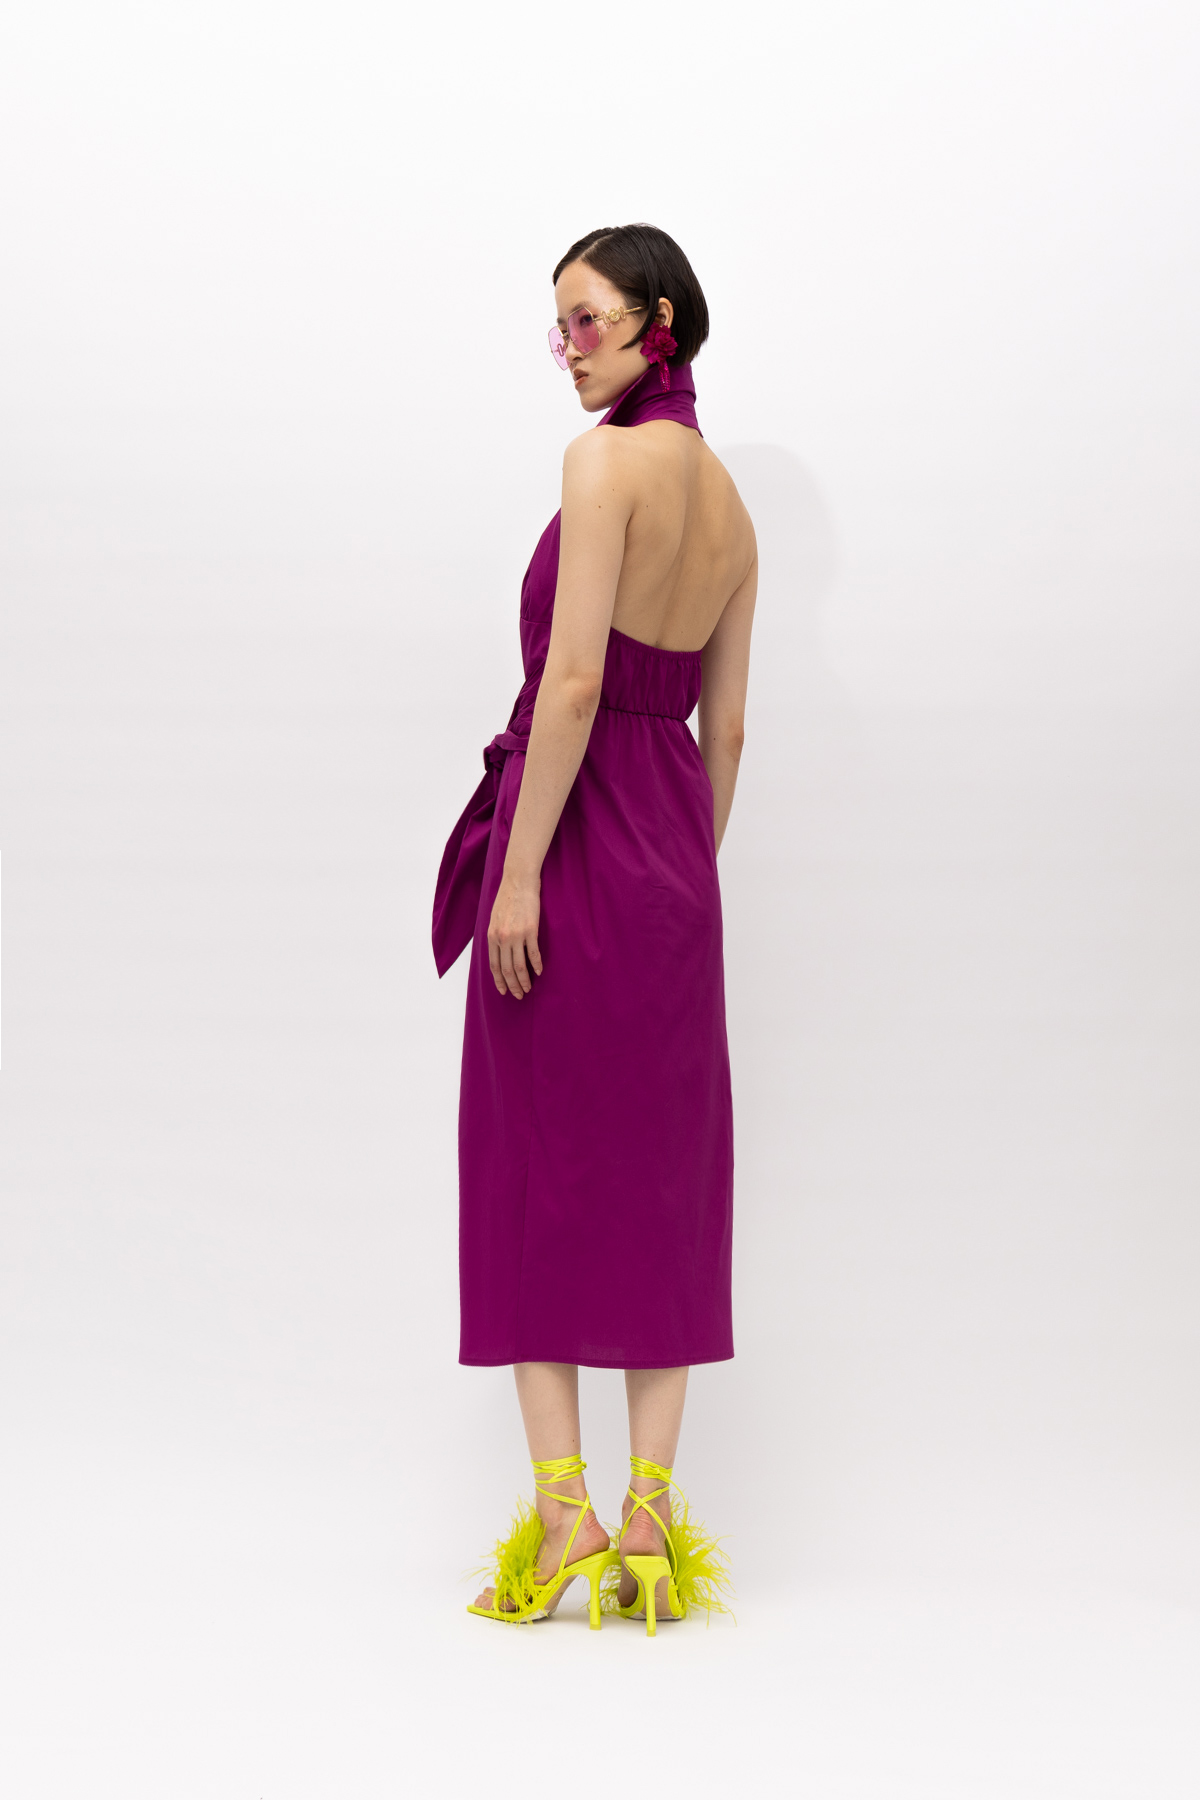 Gorgon Purple Dress - Mallory The Label